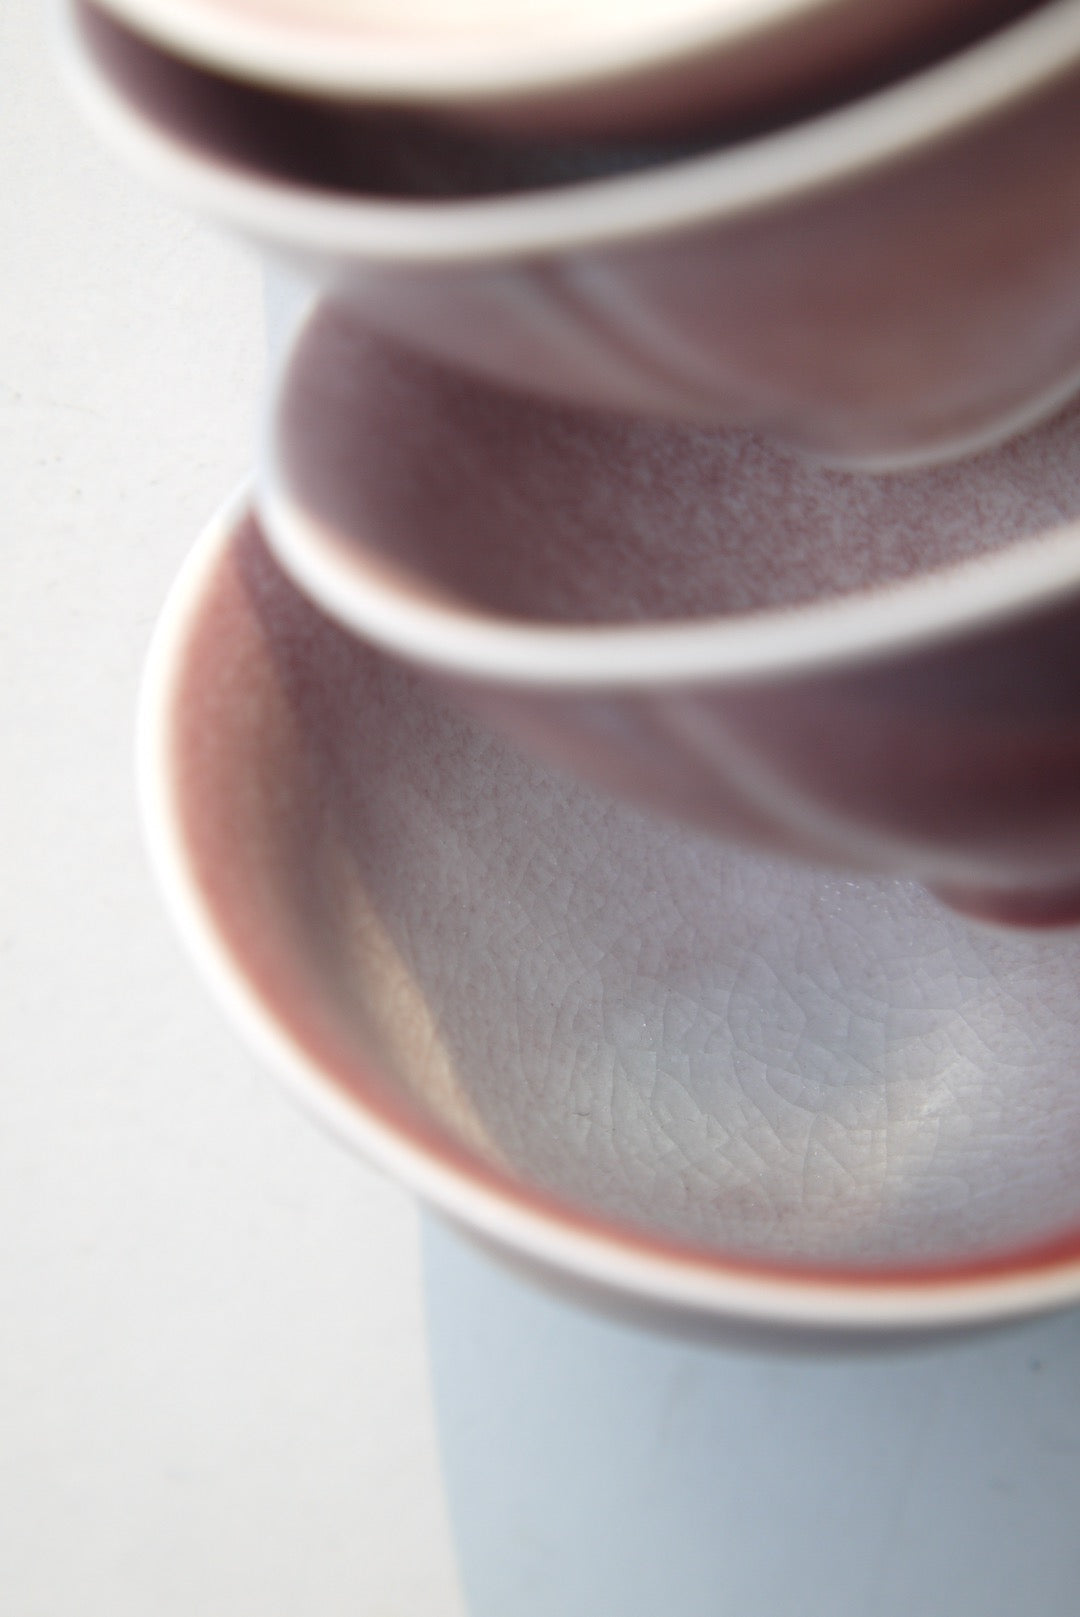 Vintage Style Cherry Colored Cracked Glaze Teacup Dehua Porcelain |Best Ceramics